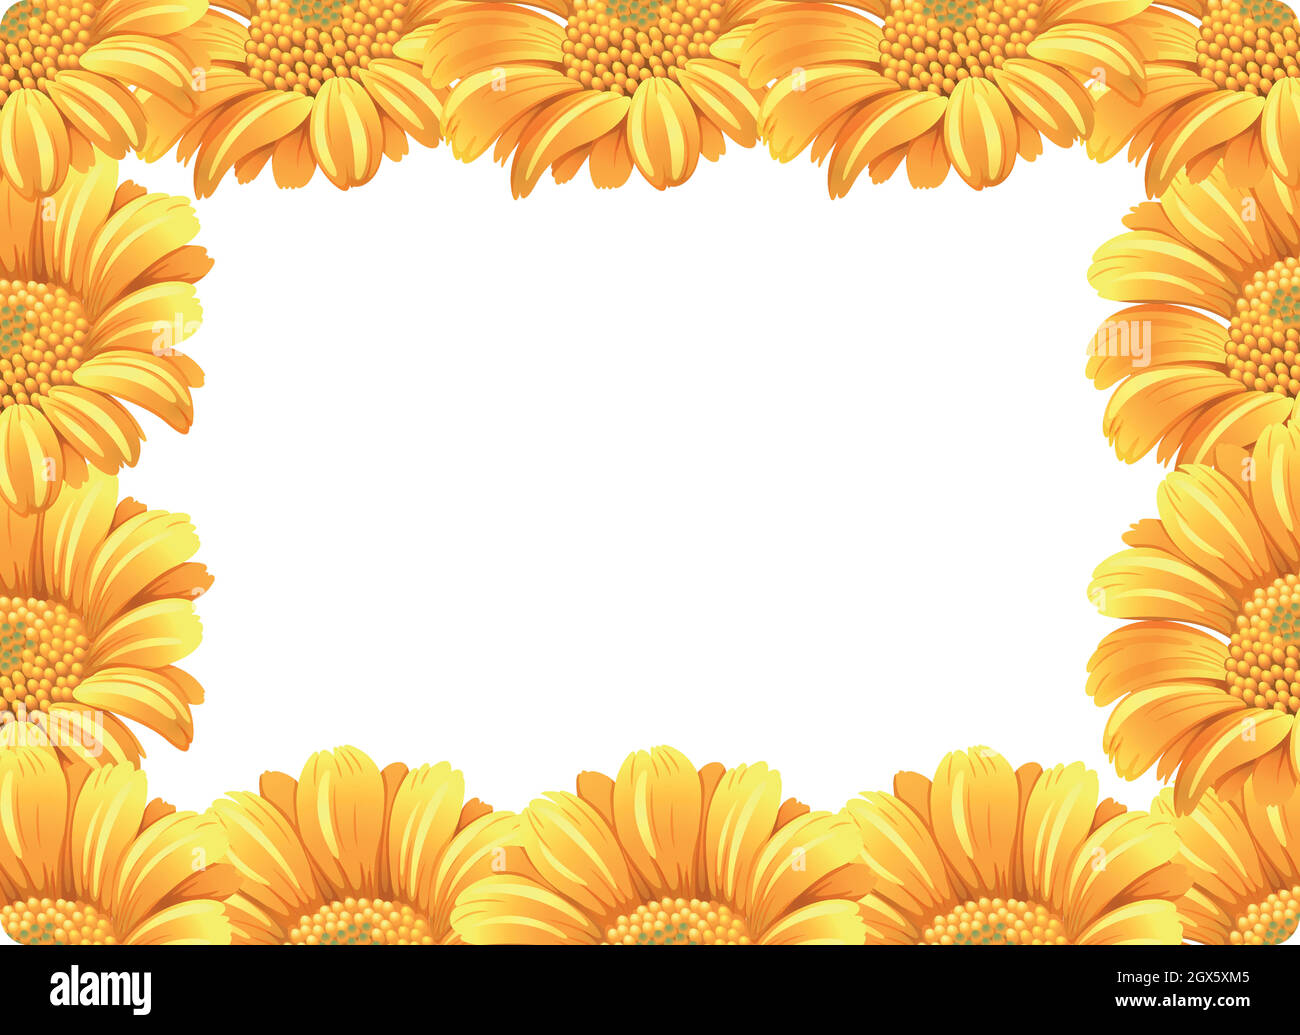 Yellow daisy flower border Stock Vector